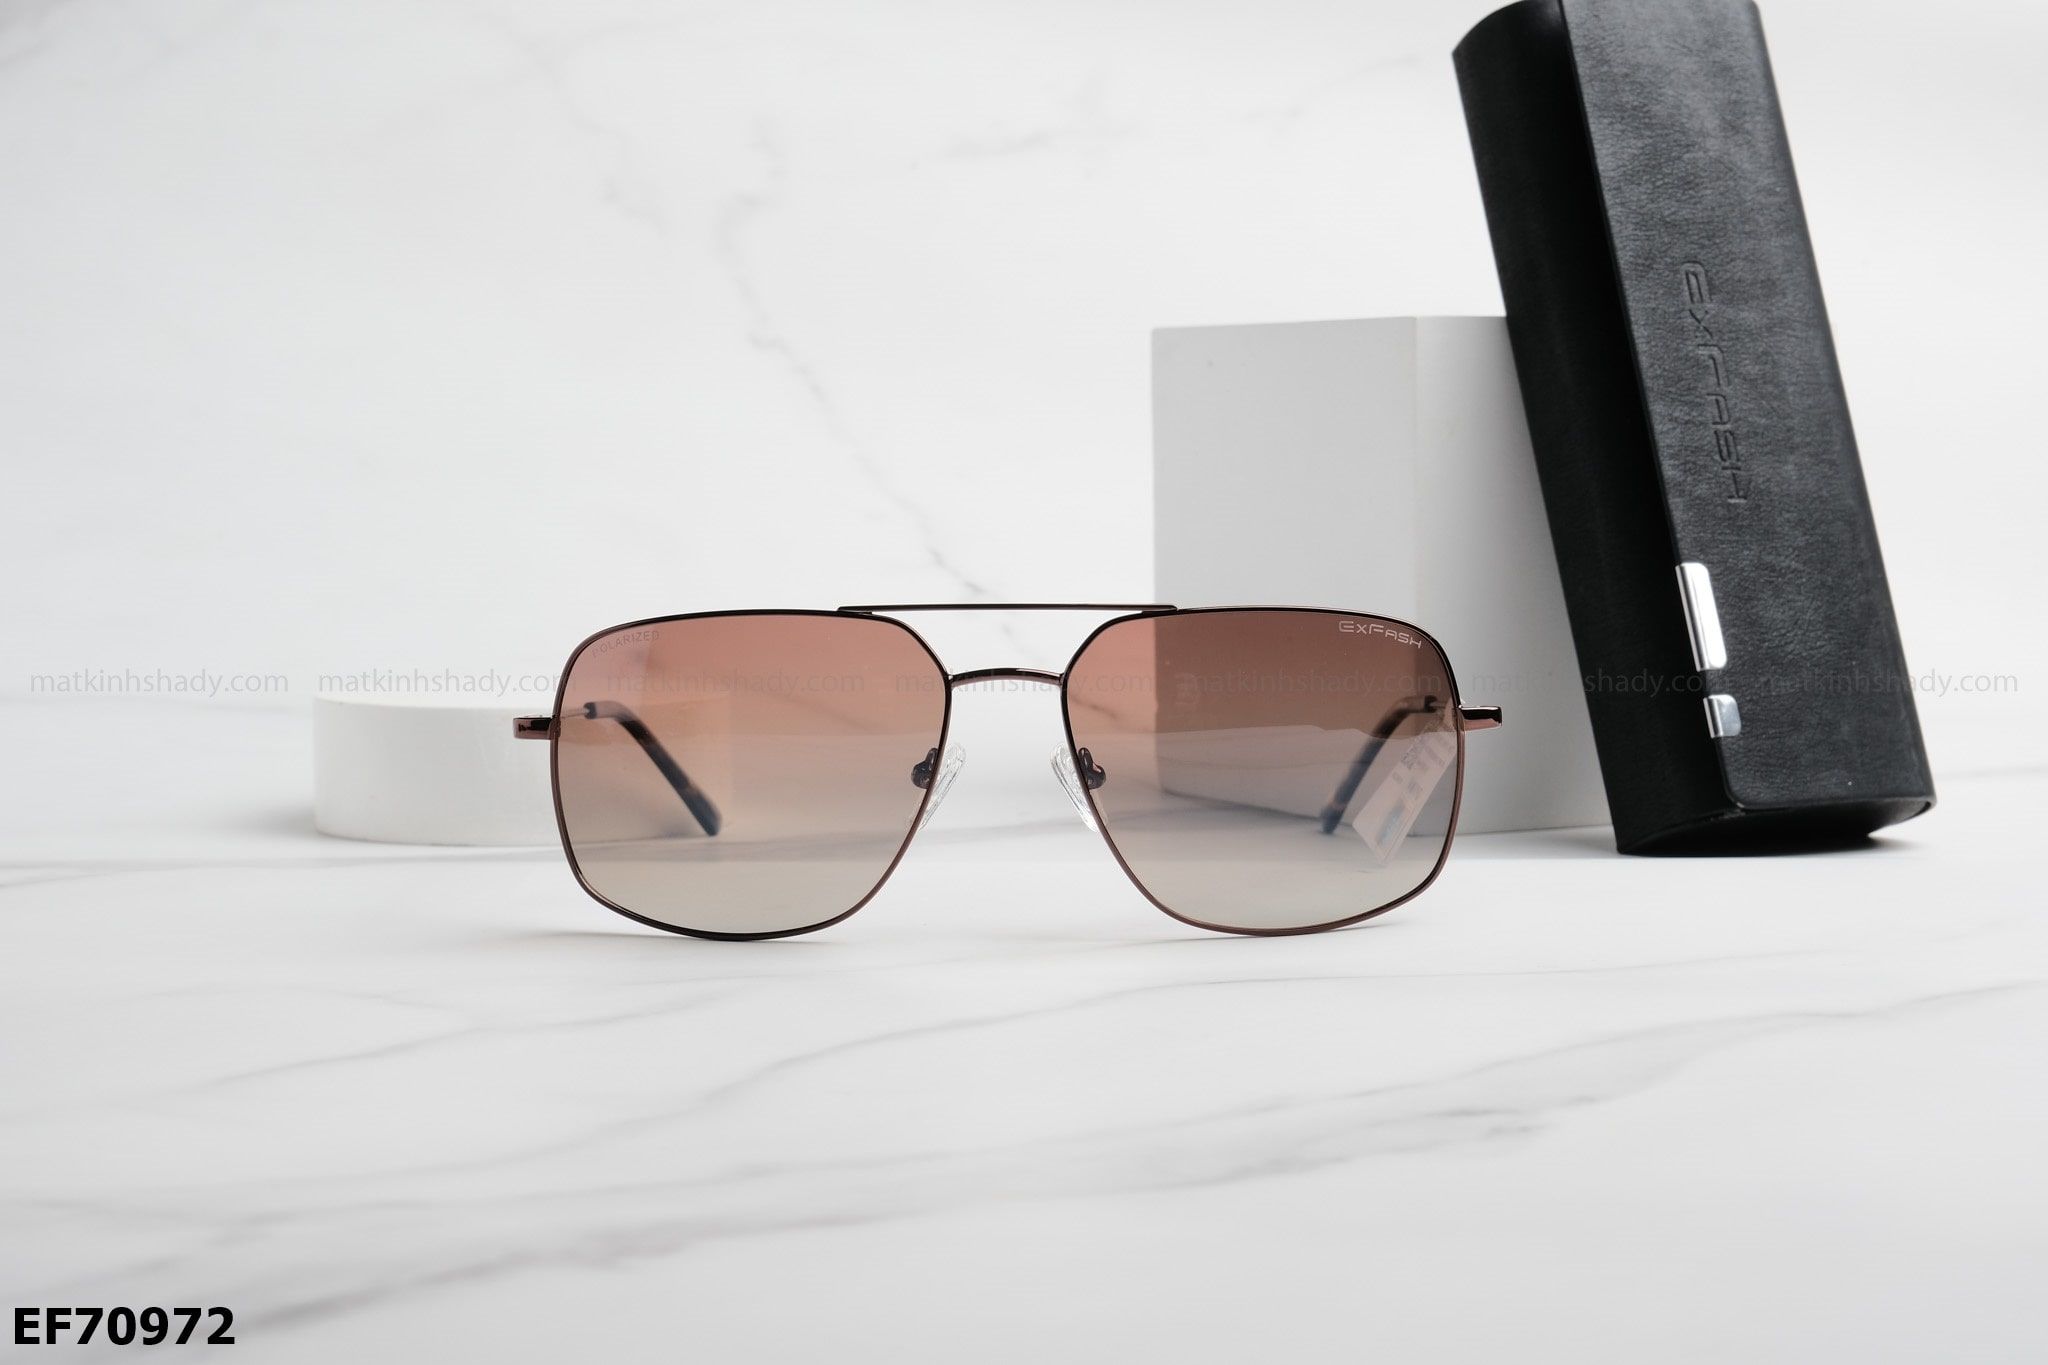  Exfash Eyewear - Sunglasses - EF70972 